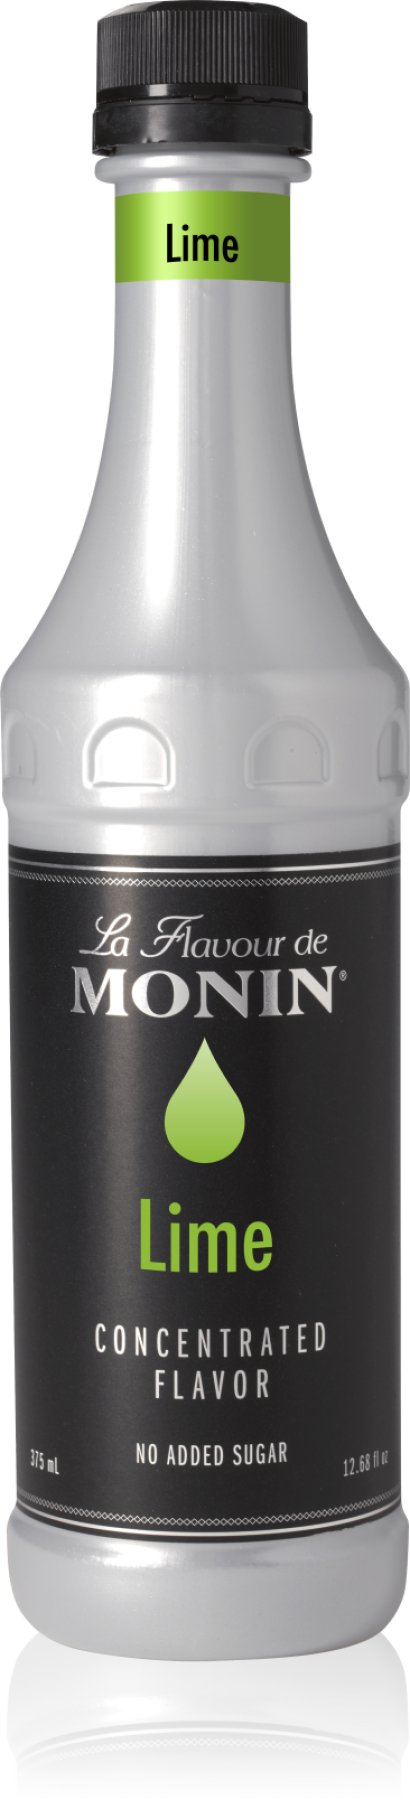 Monin Lime Concentrated Flavor 375mL Bottle